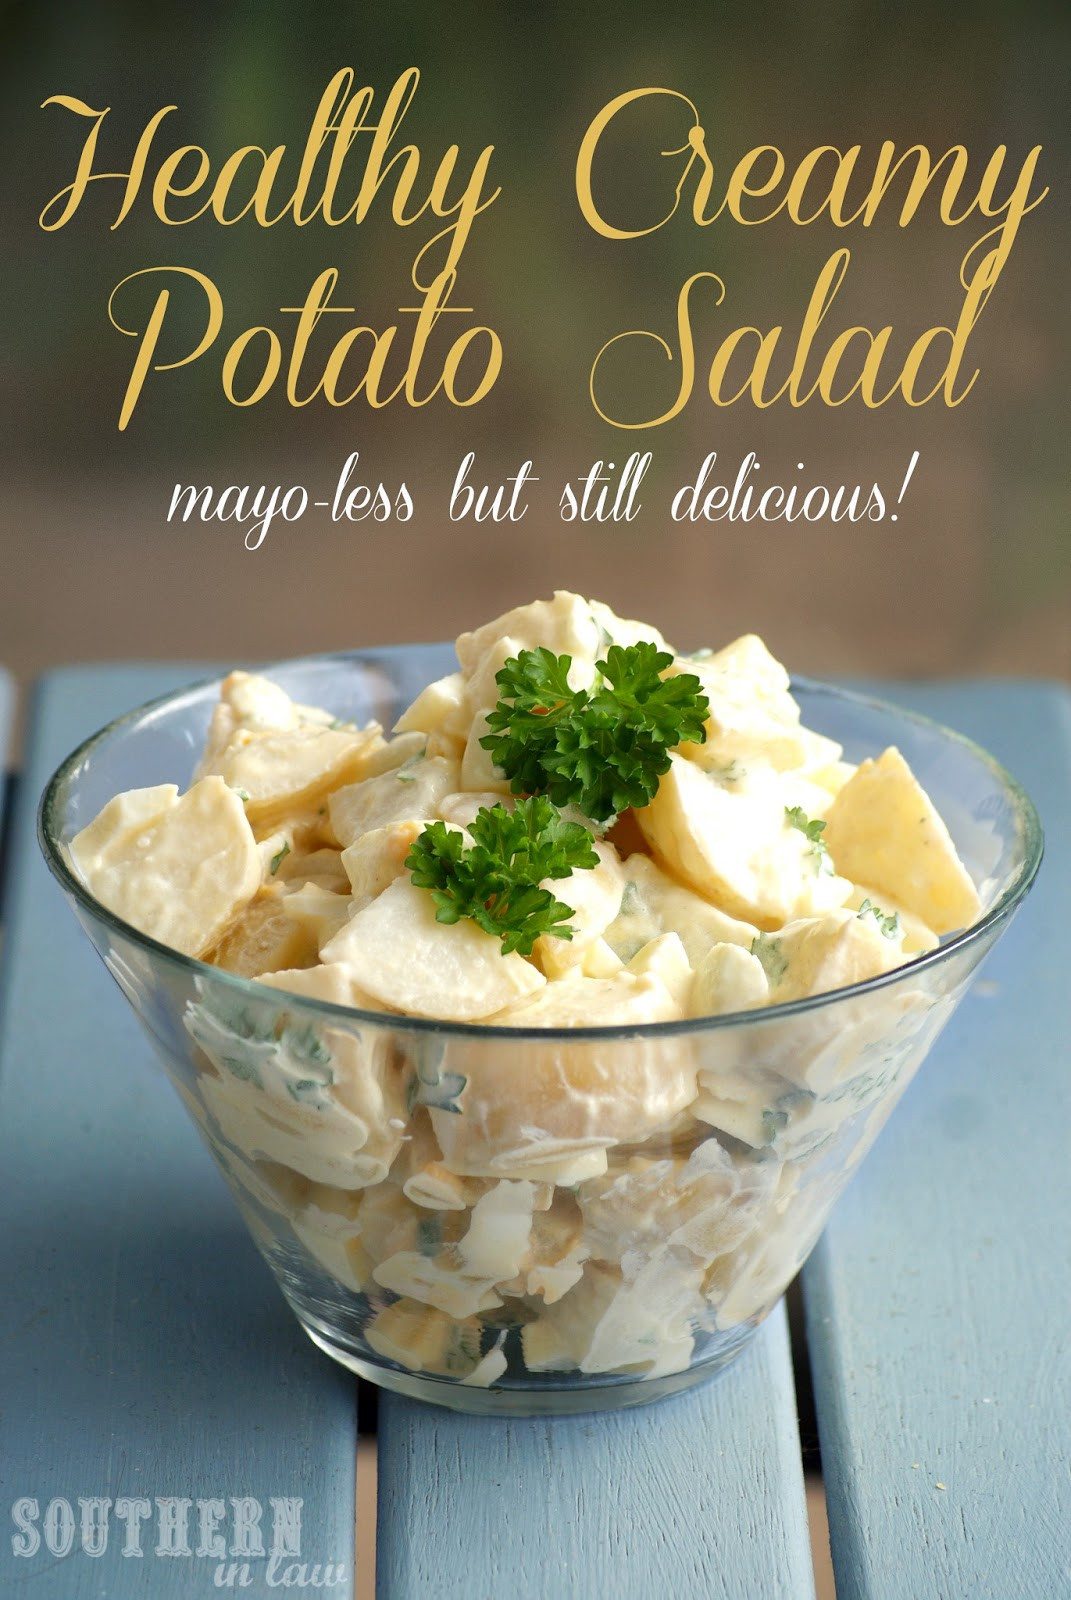 Healthy Potato Salad
 Southern In Law Recipe Healthy Potato Salad Mayo less